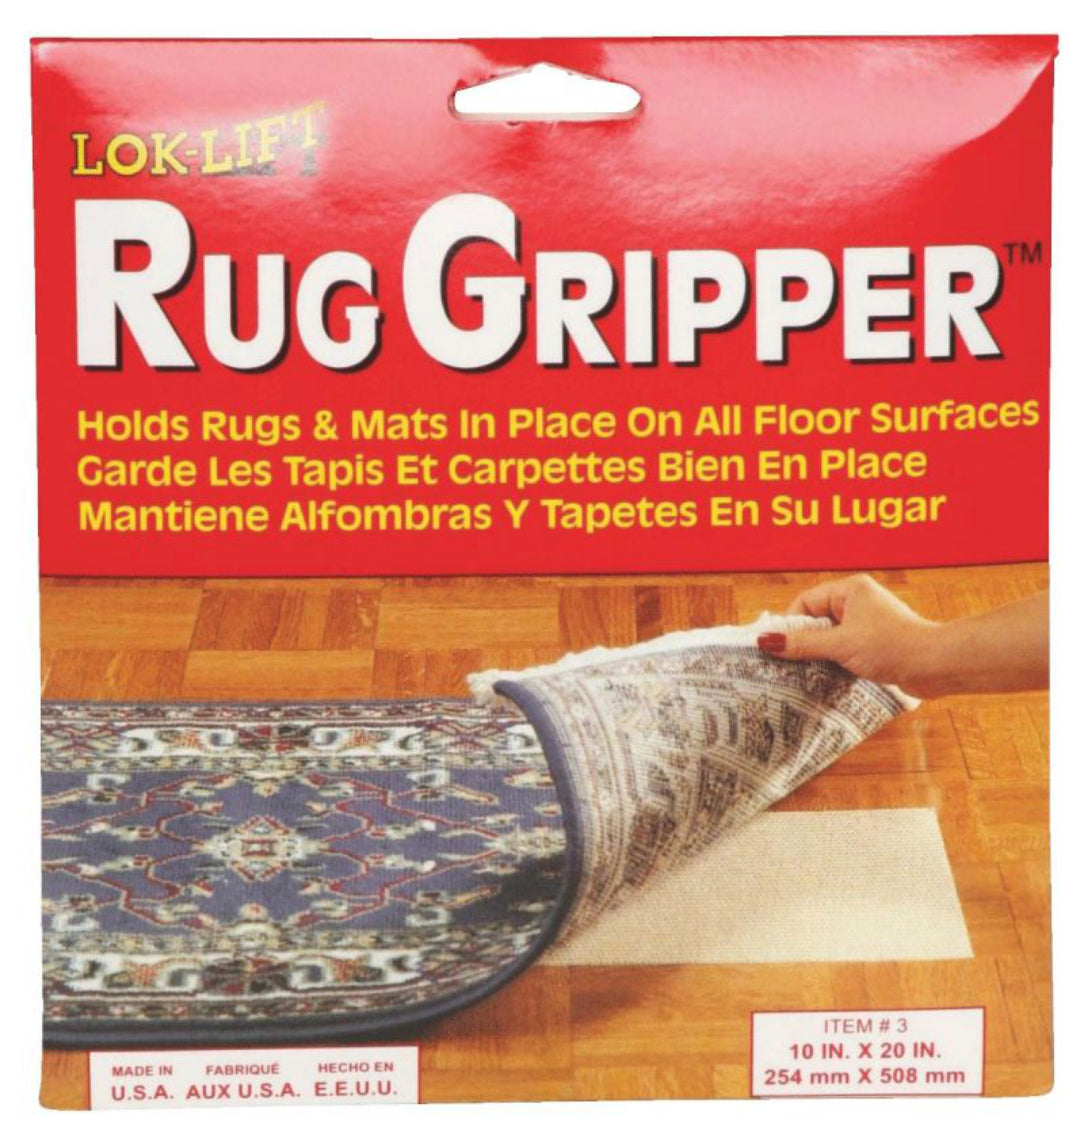 Carpet Gripper